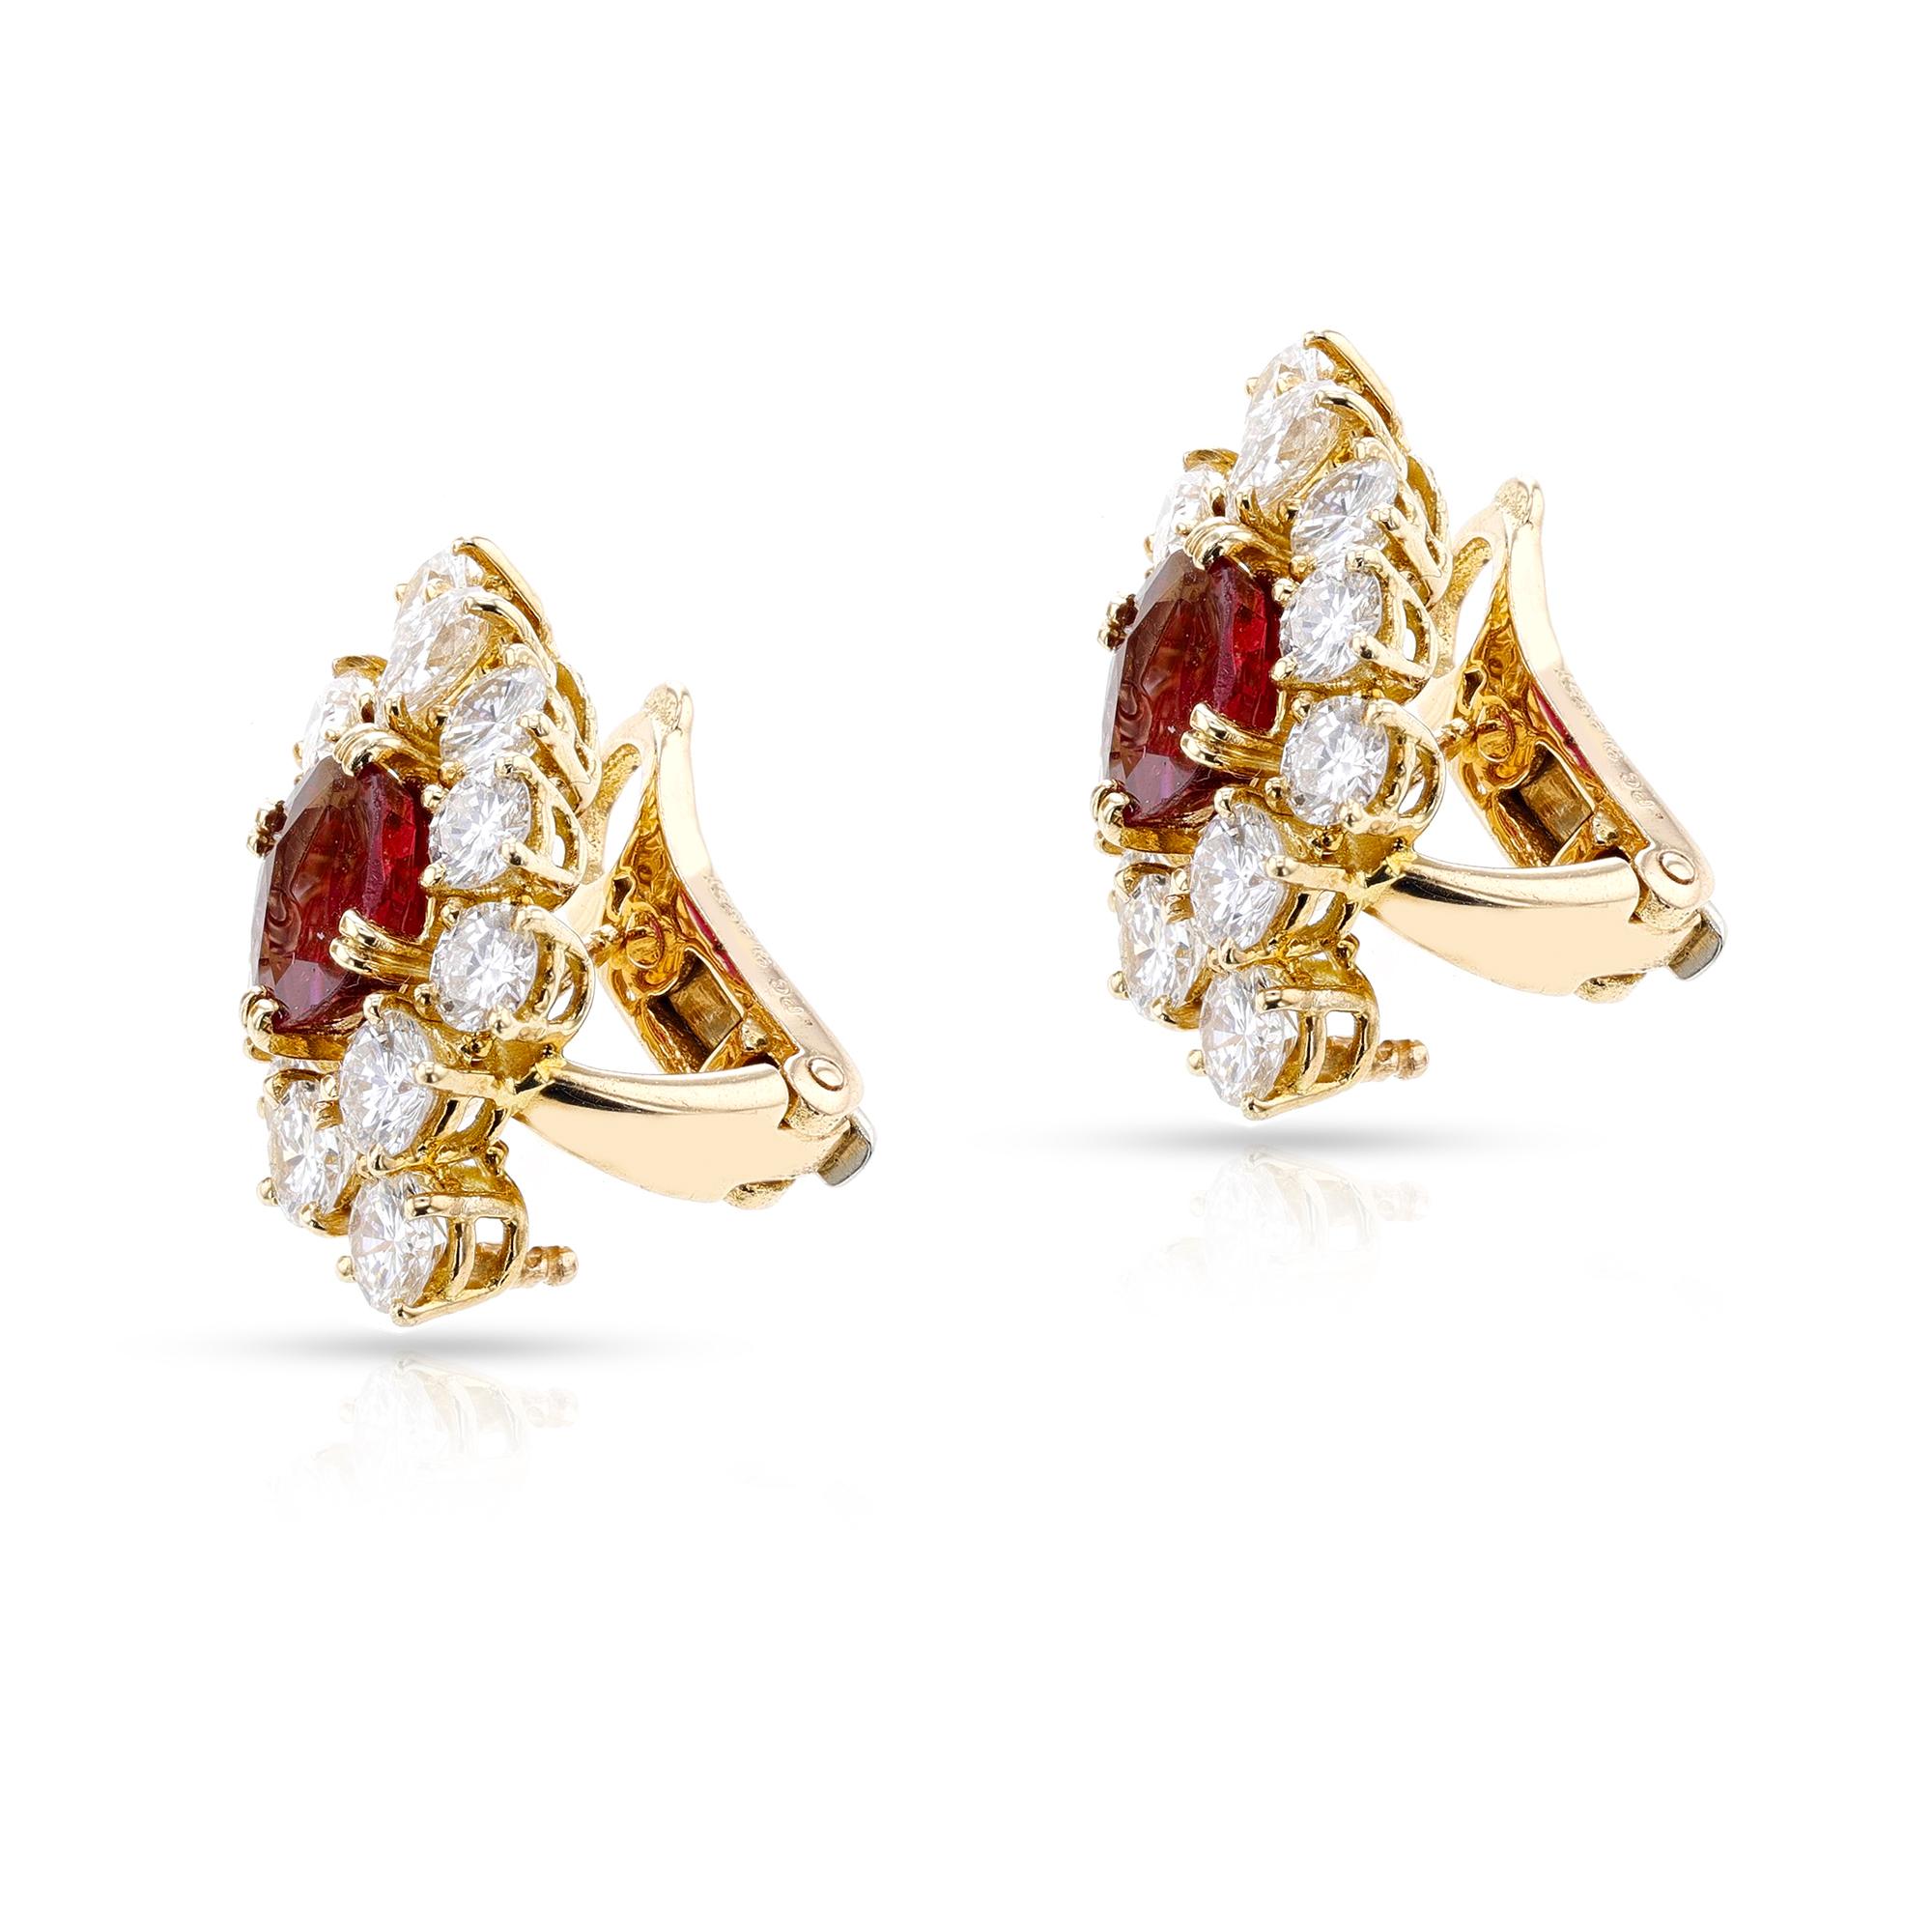 Boucheron Ruby and Diamond Day & Night Earrings, 18k For Sale 3